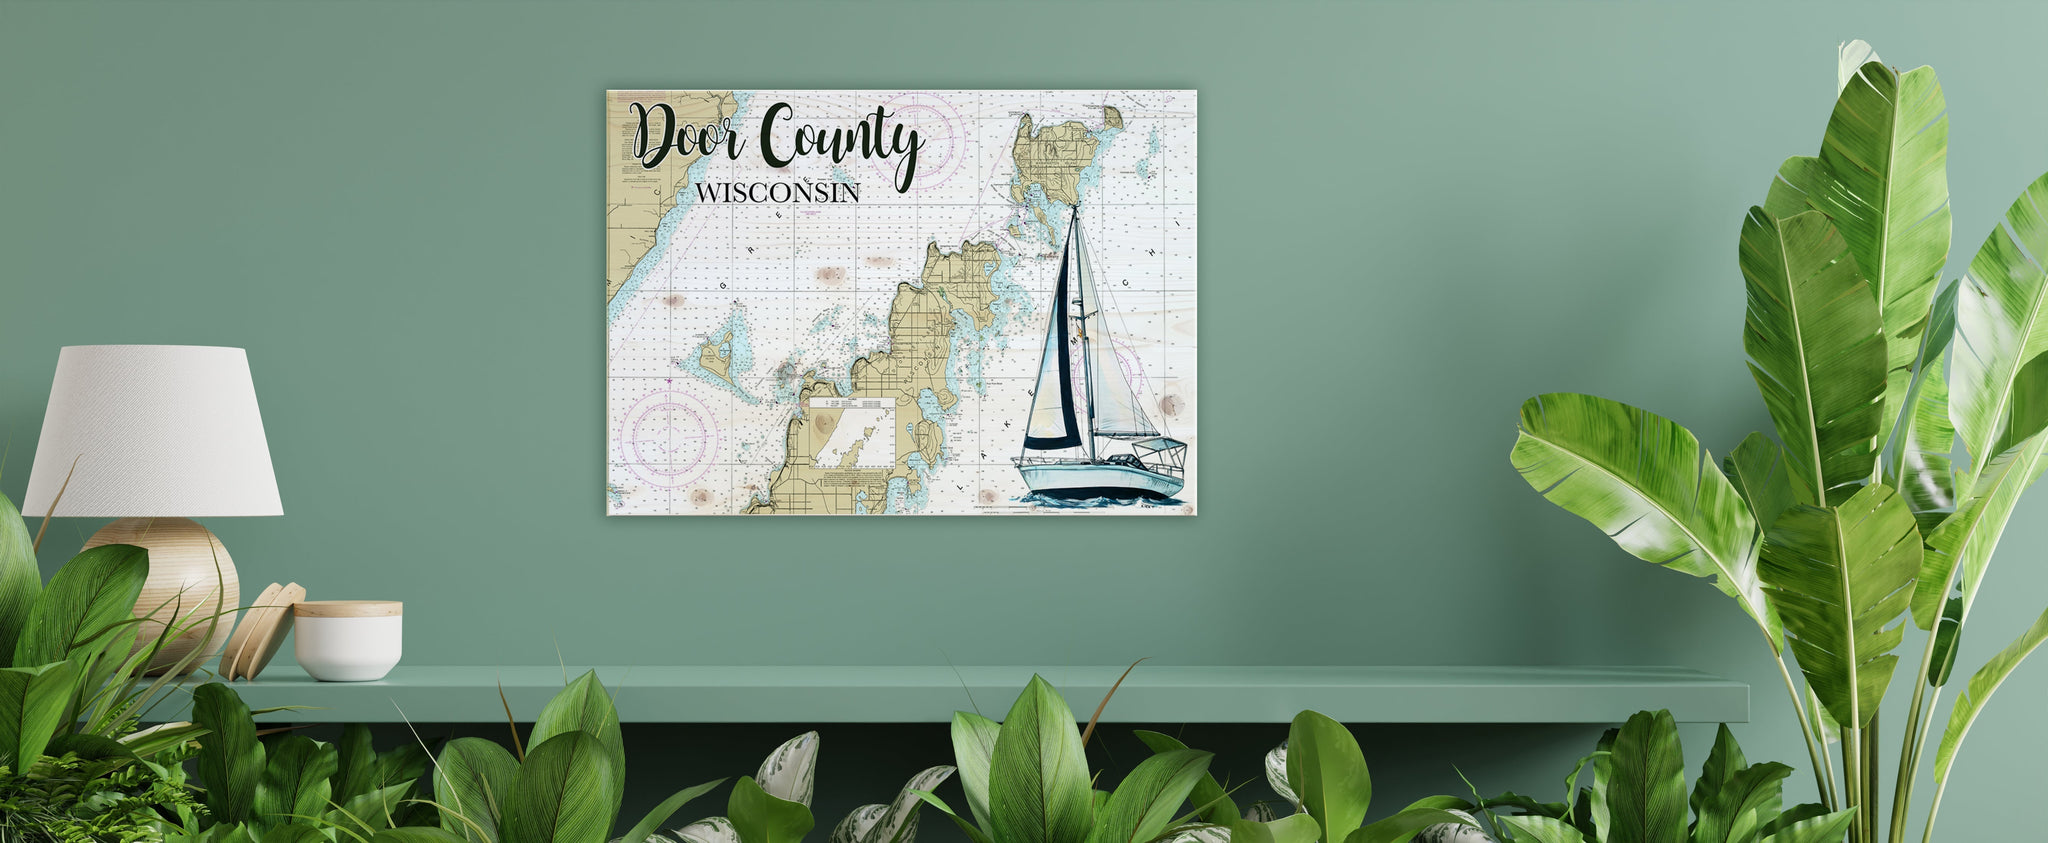 Key Colony Beach, FL  Marlin Plank Map